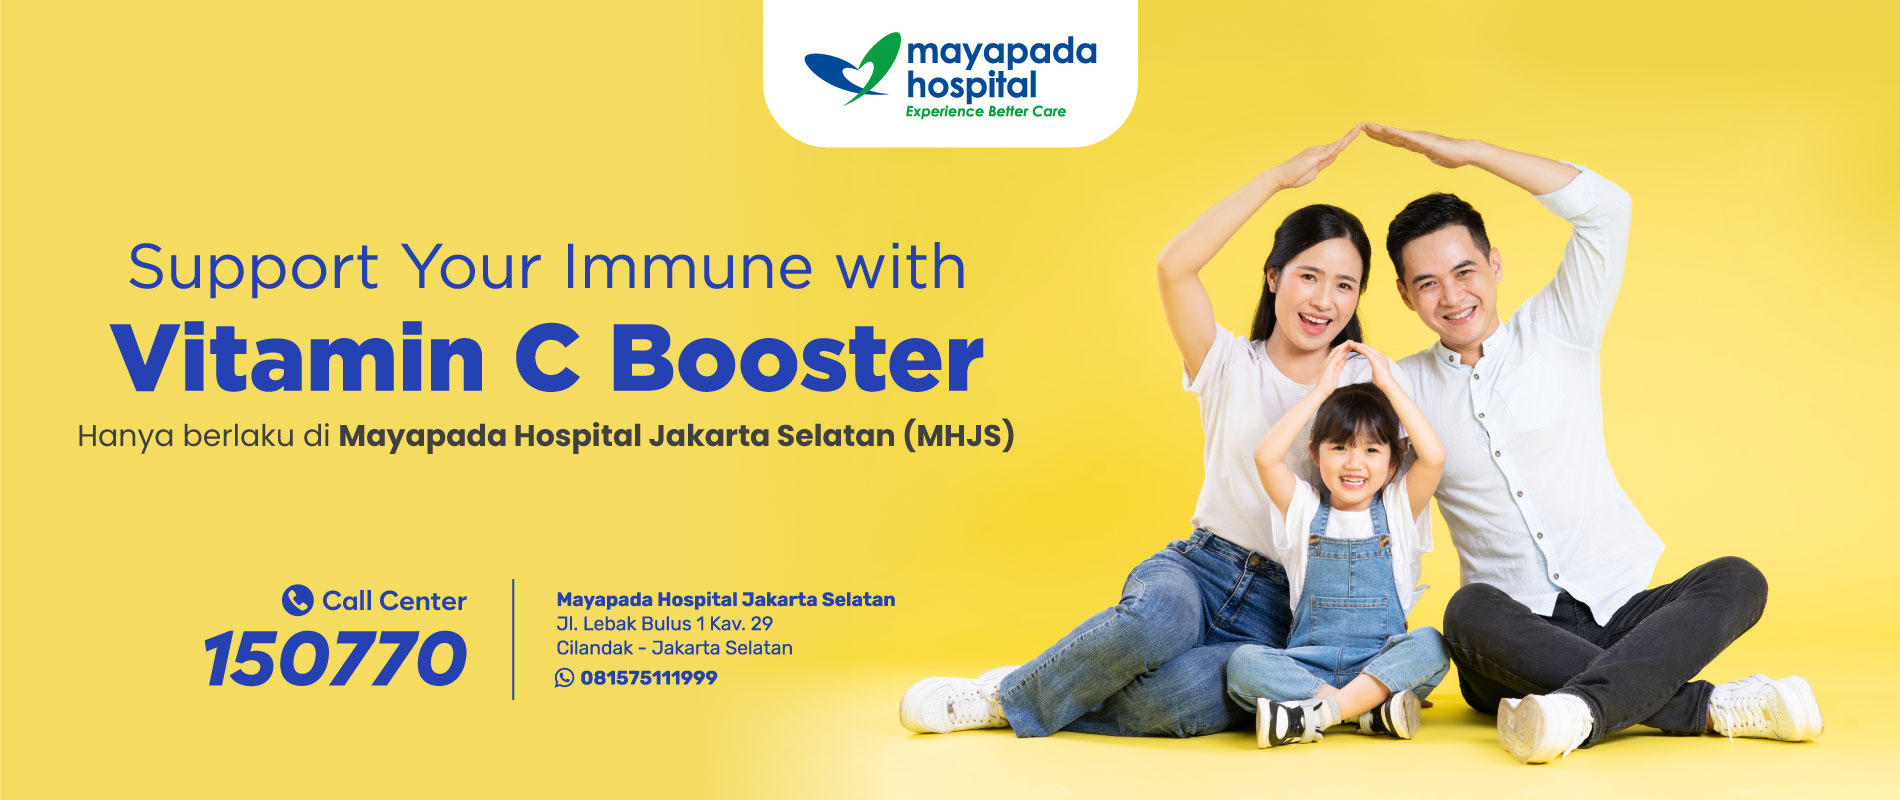 Promo Booster Vitamin C Mayapada Hospital Jakarta Selatan IMG